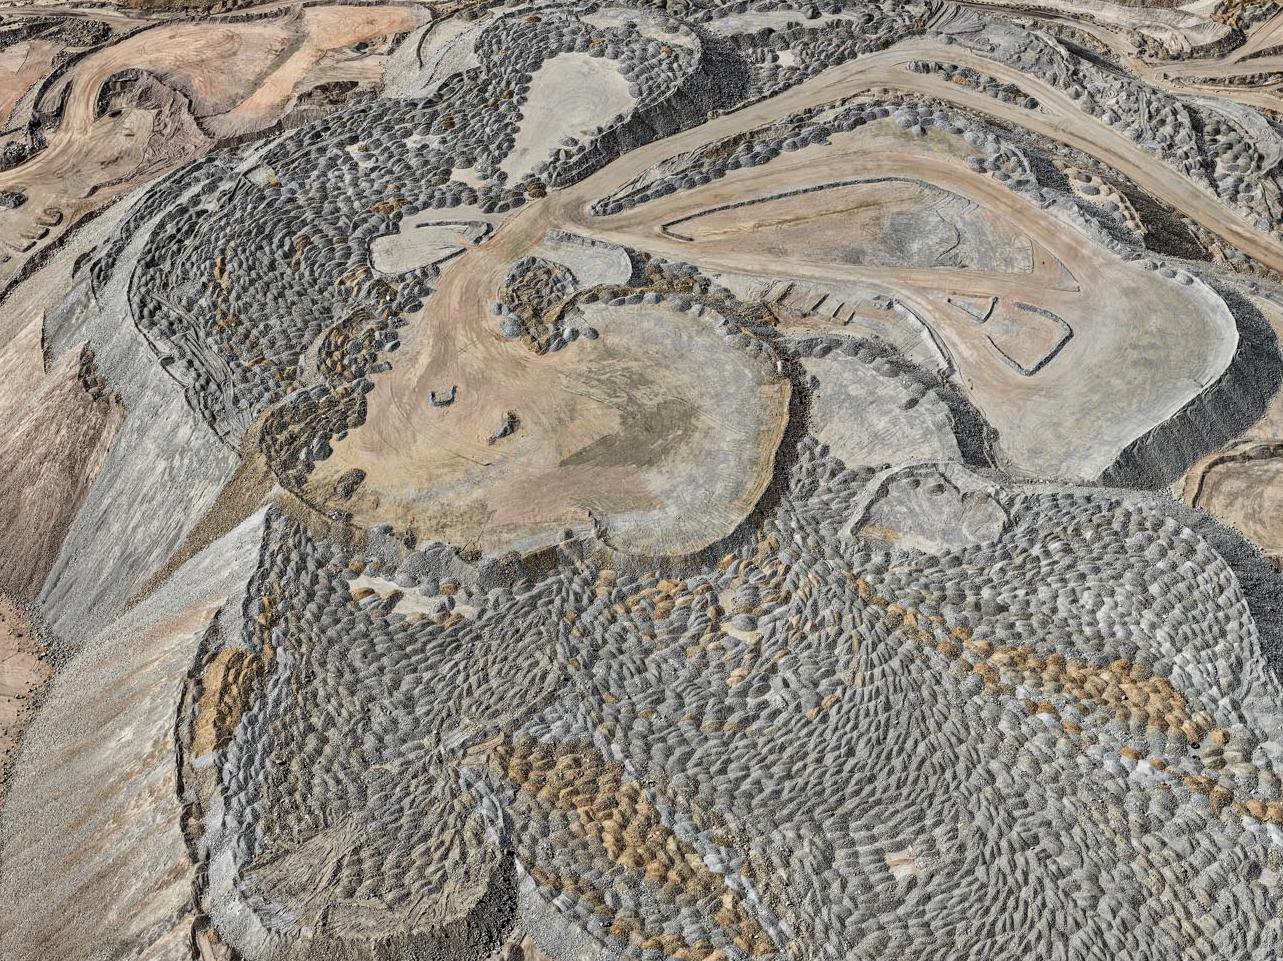 Edward BURTYNSKY (*1955, Canada)
Chuquicamata Copper Mine Overburden #1, Calama, Chile, 2017
Pigment inkjet print on Kodak Professional Photo Paper
Sheet: 148.65 x 198.4 cm (58 1/2 x 78 in.)
Edition of 3; Ed. no. 1/3

Edward Burtynsky is regarded as